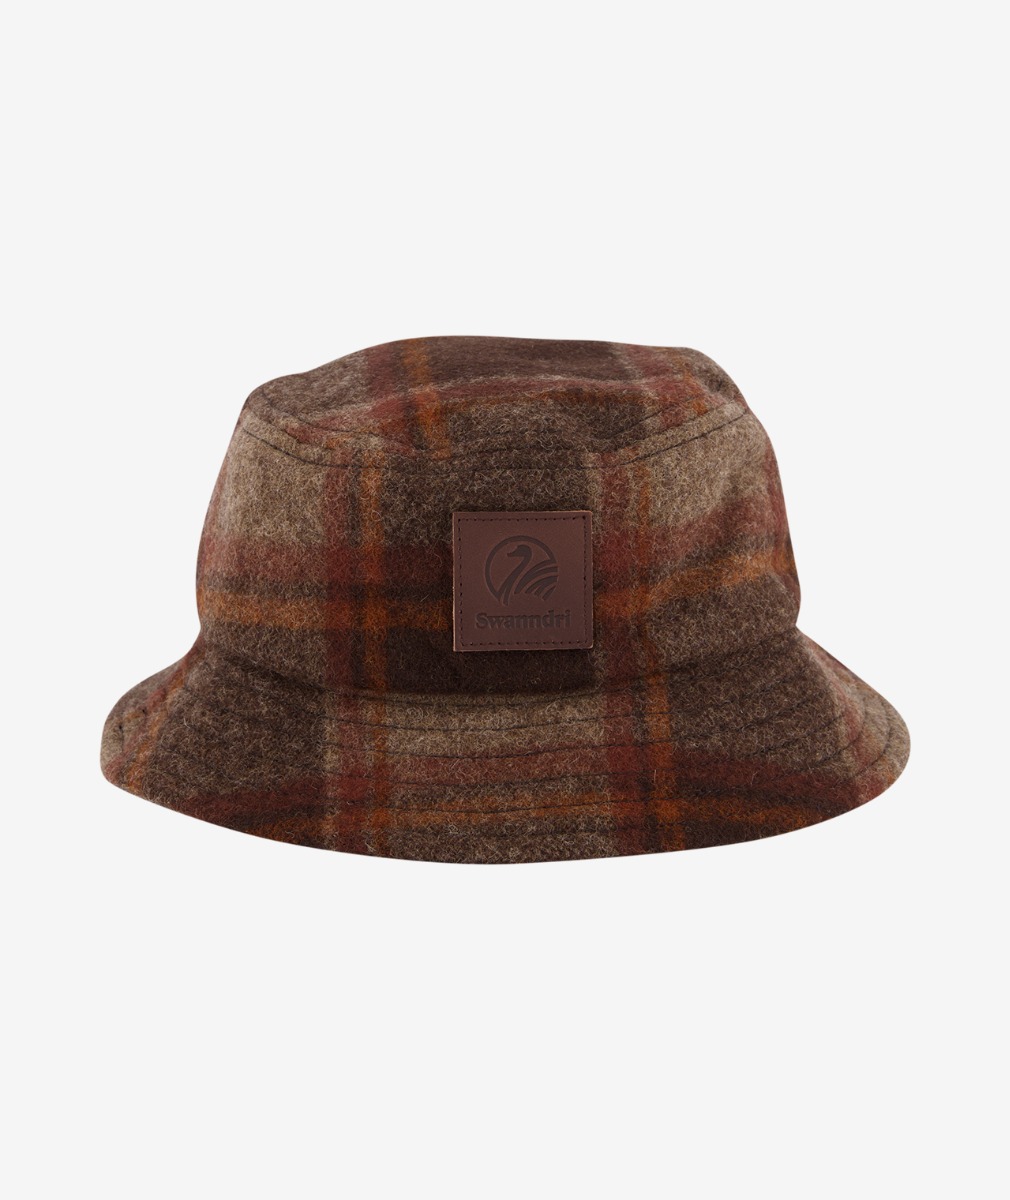 Swanndri Kaimai Wool Bucket Hat in High Country